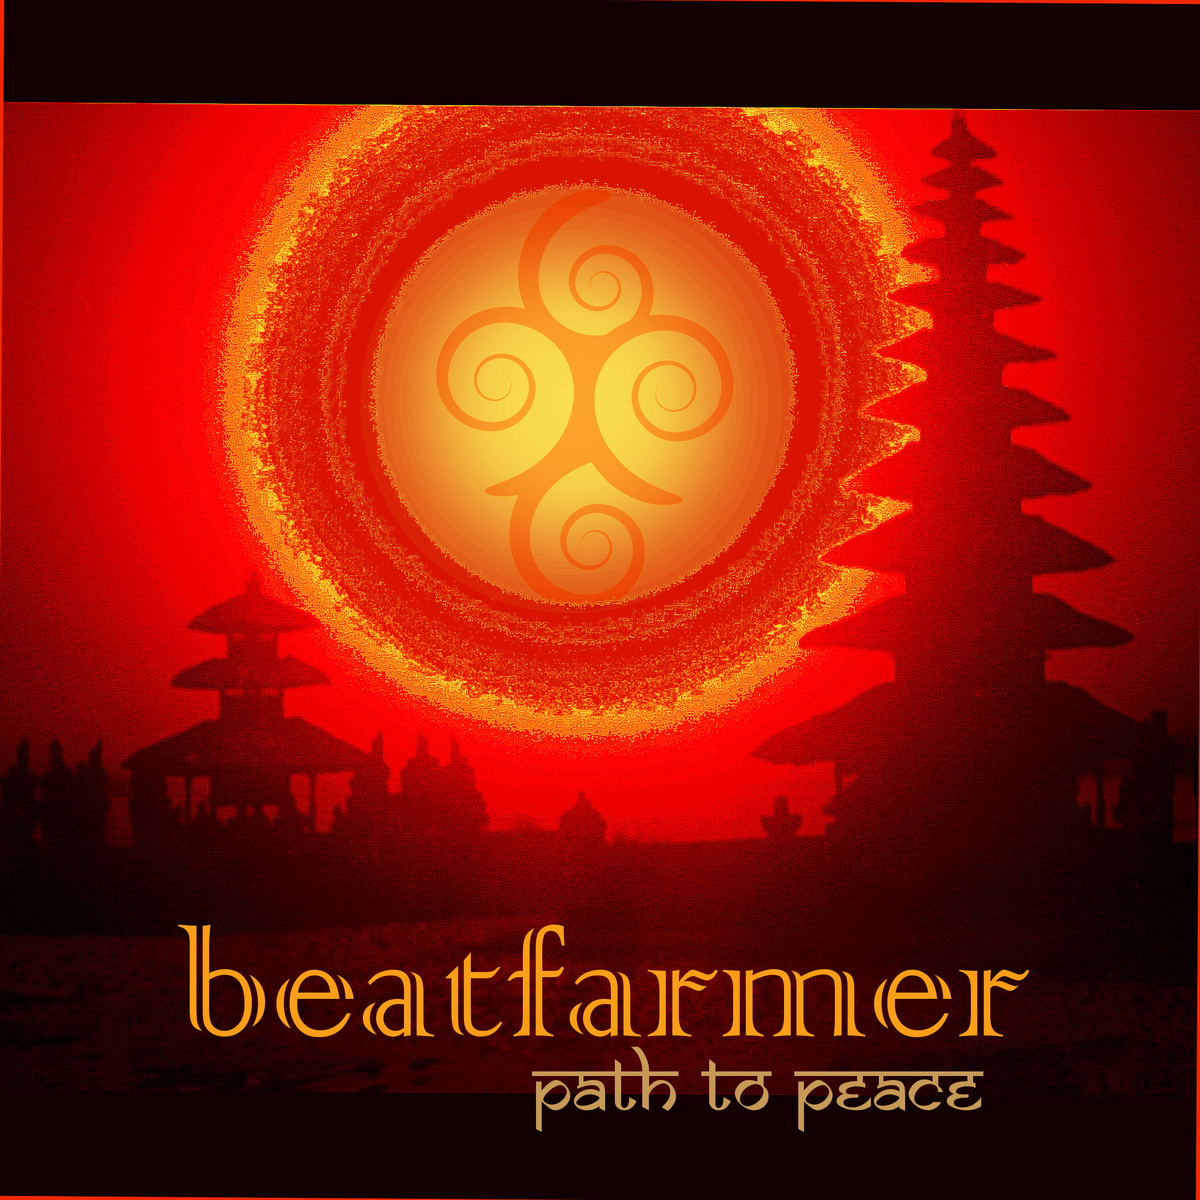 Pobierać Beatfarmer - Path to Peace (live edit)